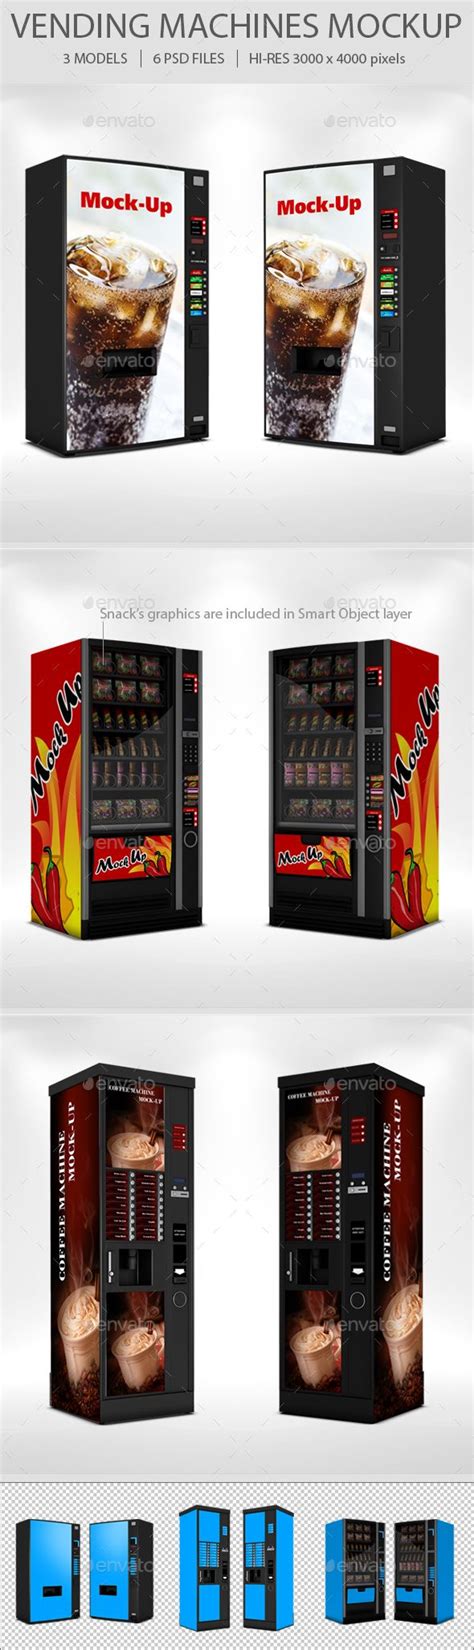 Vending Machine Mockup Set | Vending machine, Mockup, Macbook mockup